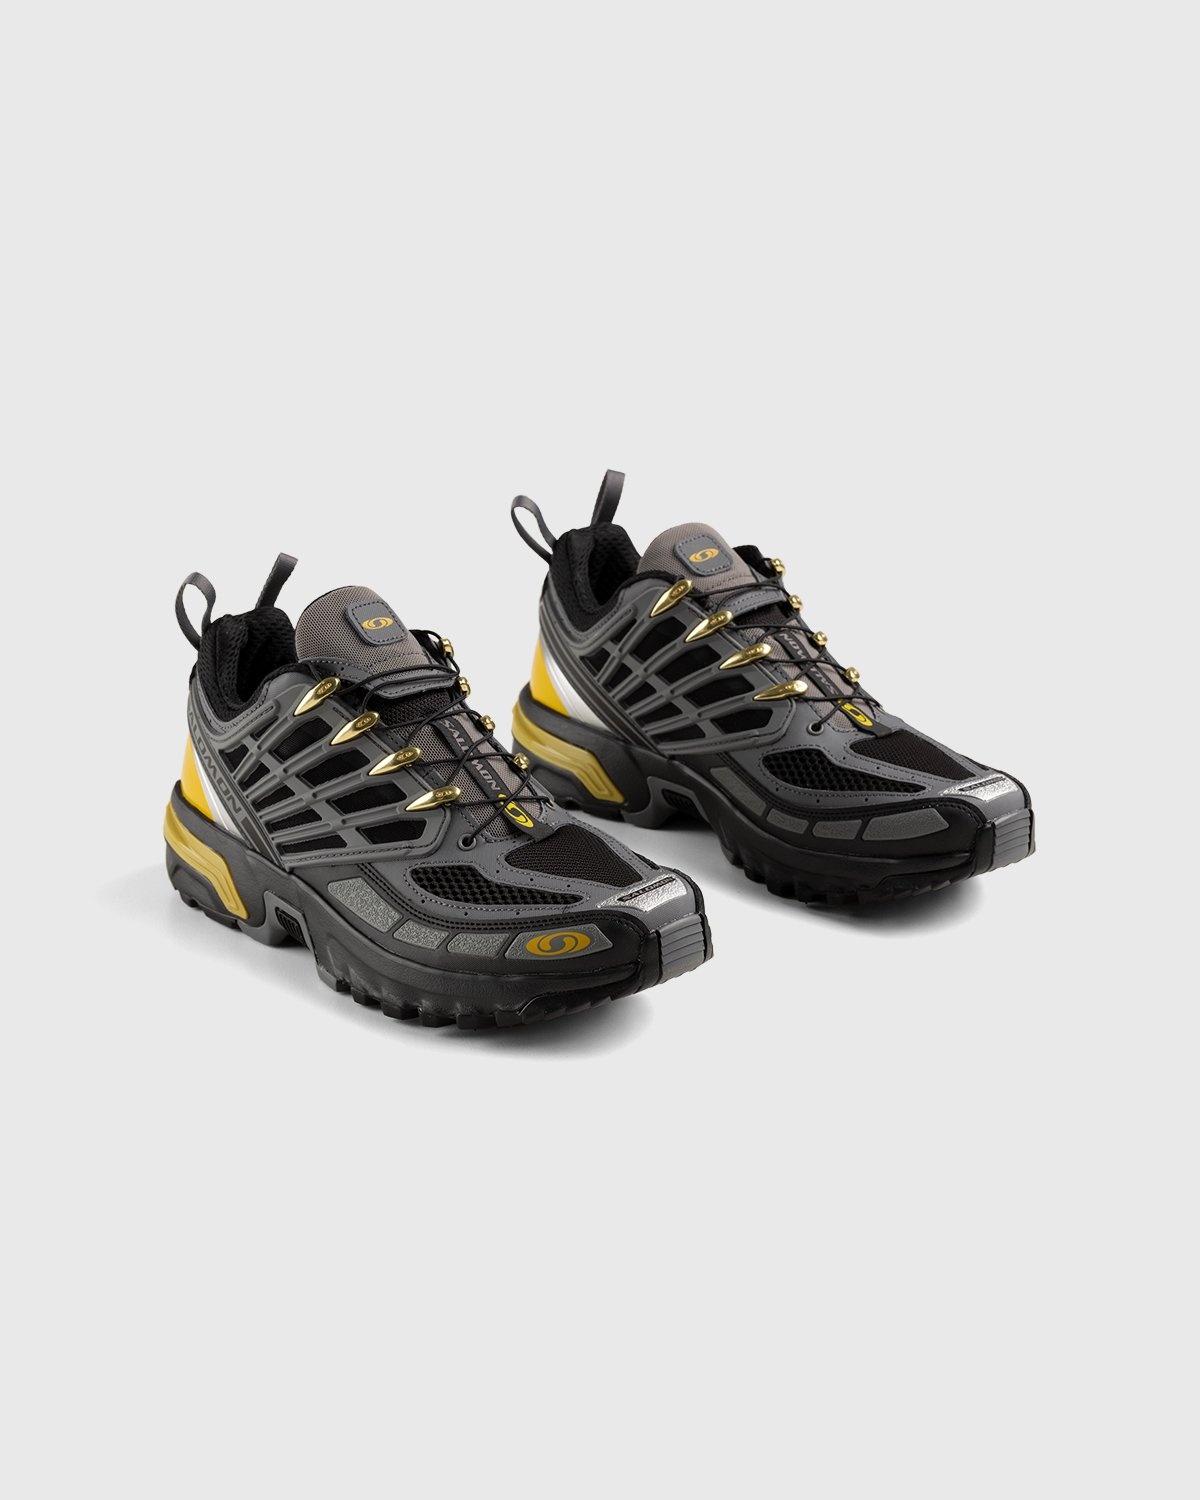 Salomon – ACS PRO ADVANCED Quiet Shade/Black/Antique Moss - Low Top Sneakers - Grey - Image 3